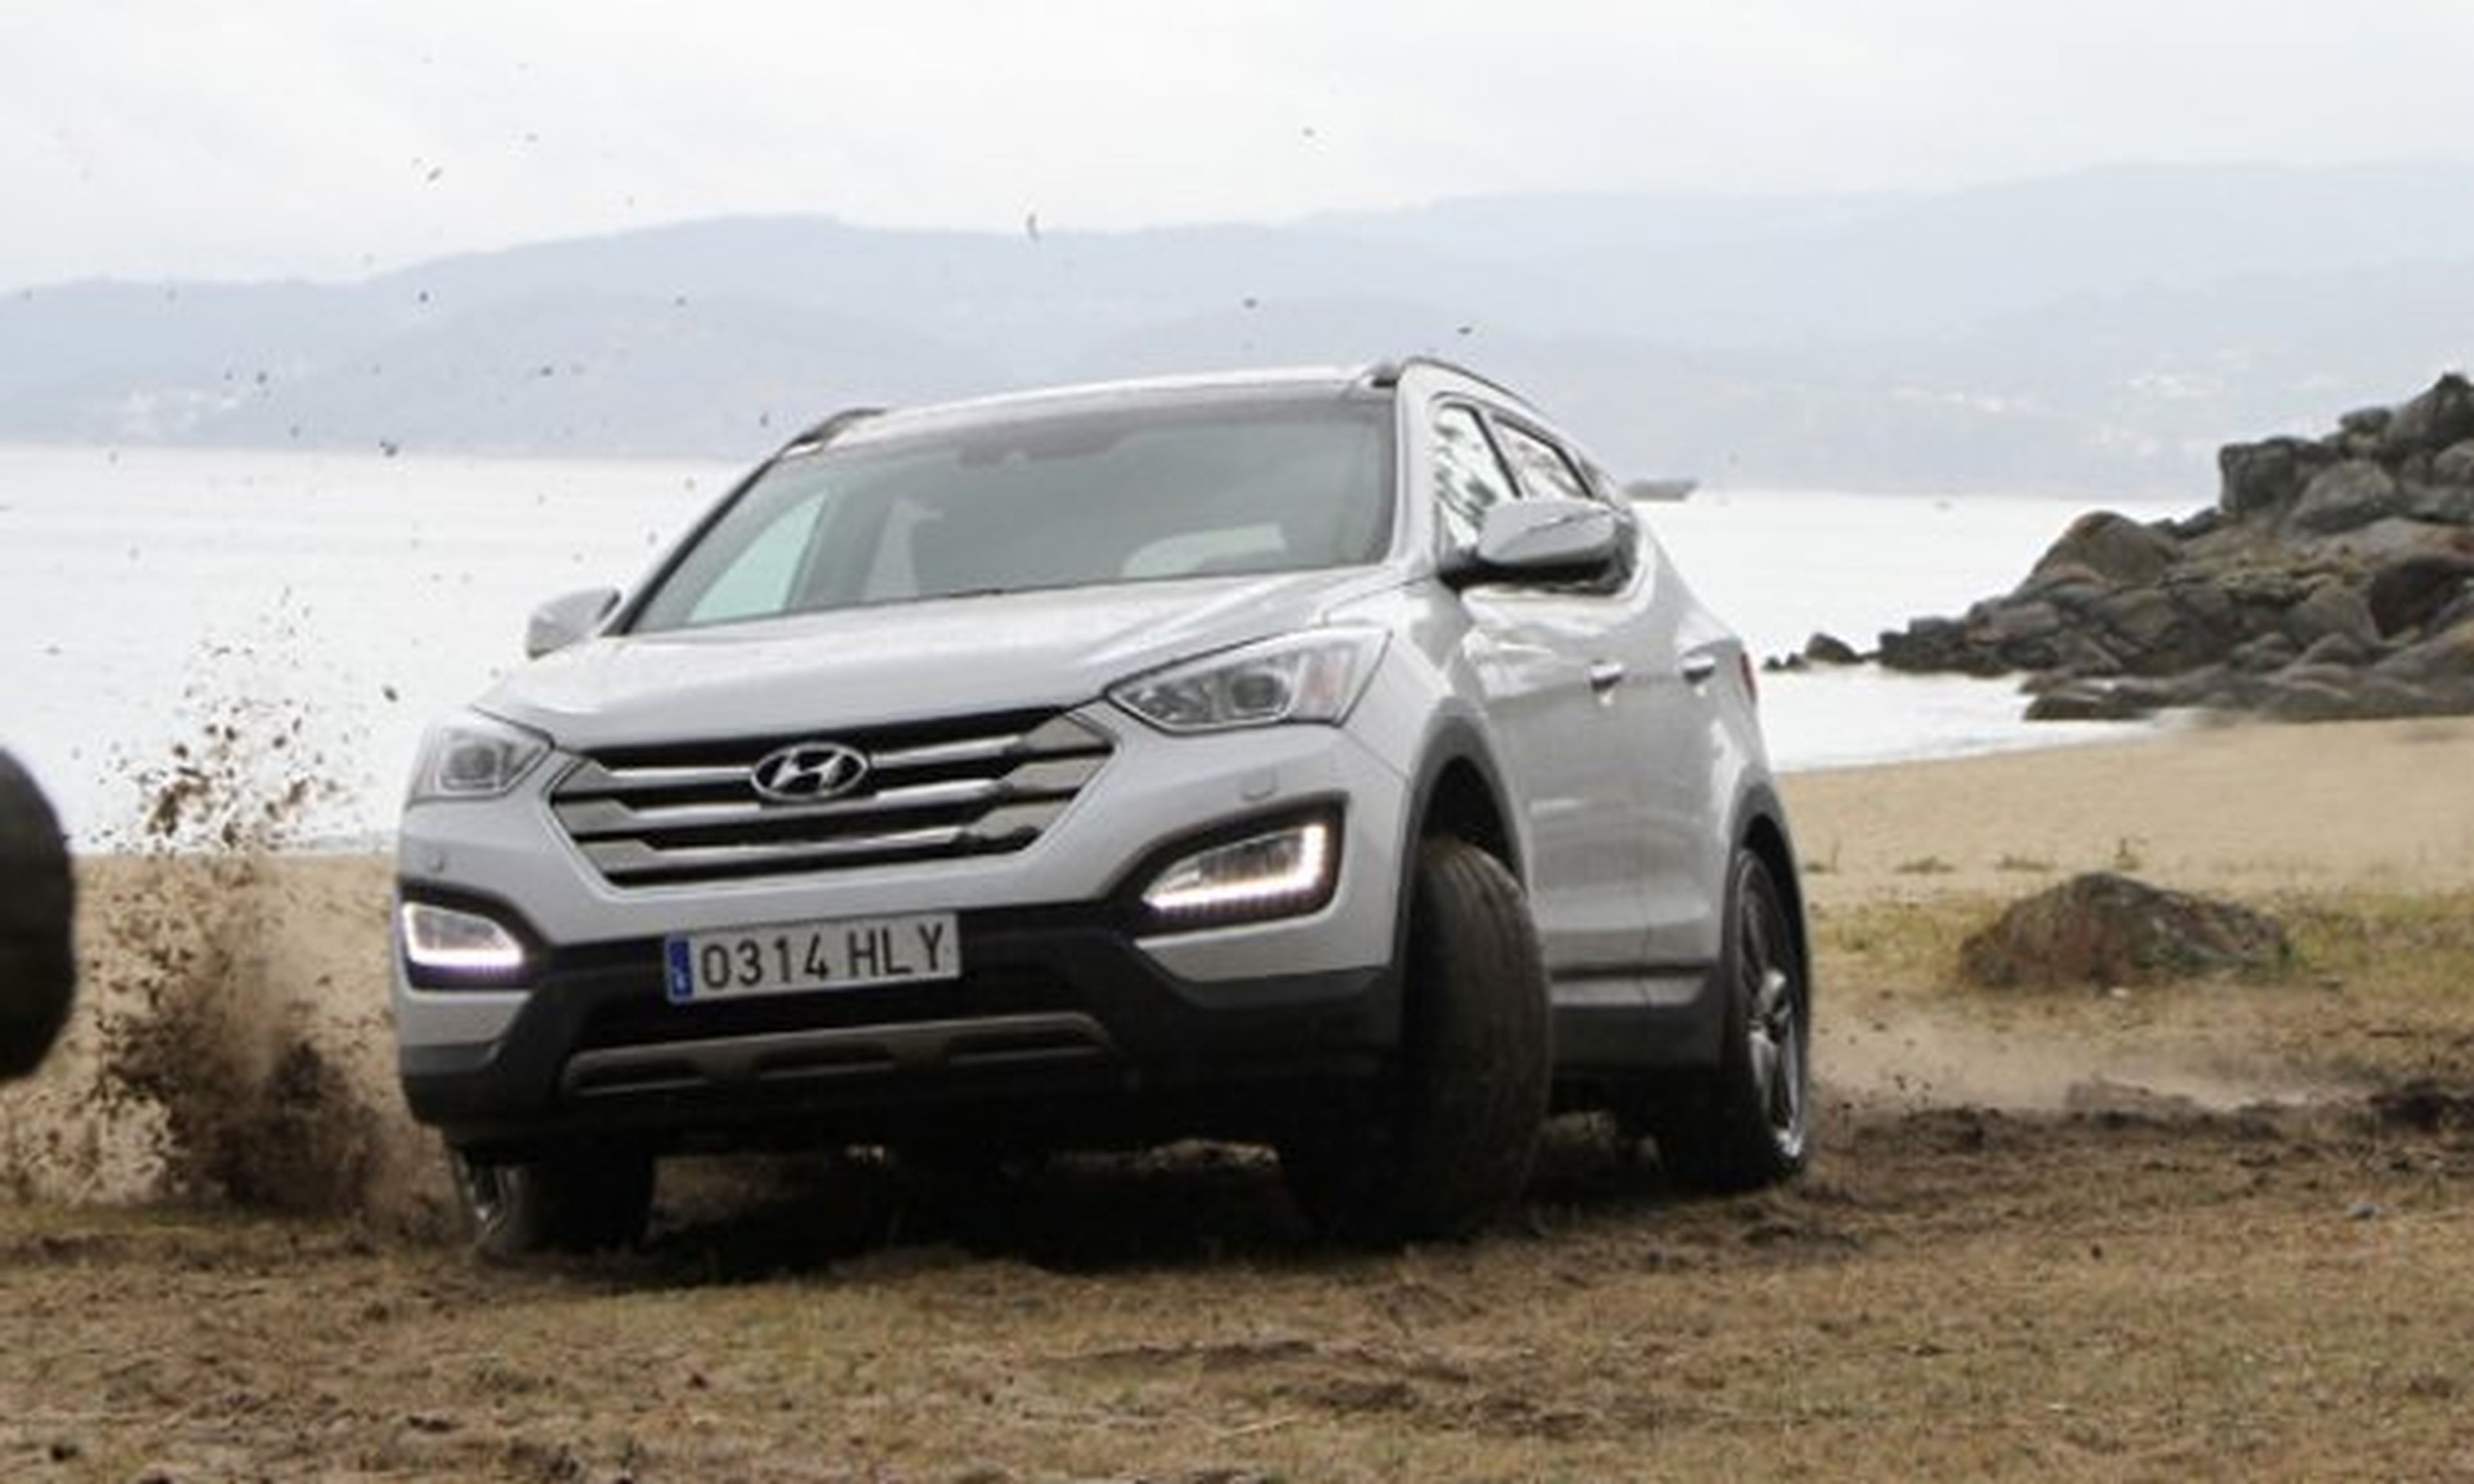 Hyundai Santa Fe 2013 frontal